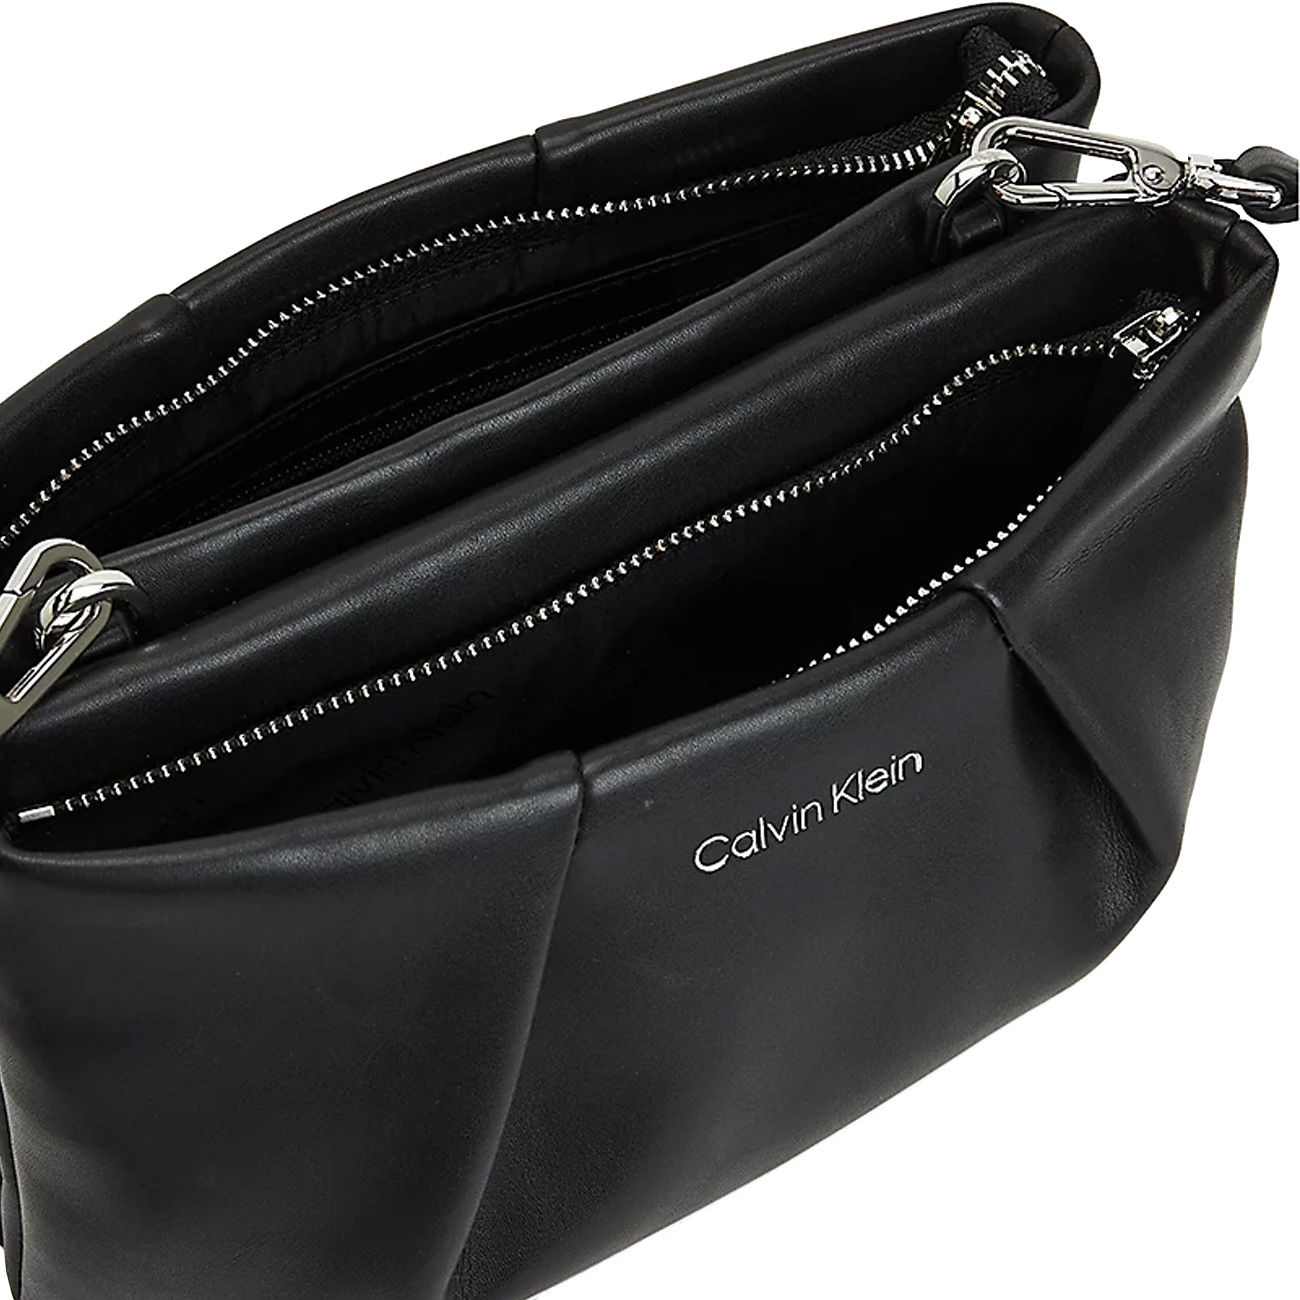 Leather Calvin Klein Single Strap Women's Purse Shoulder Hand Black Bag